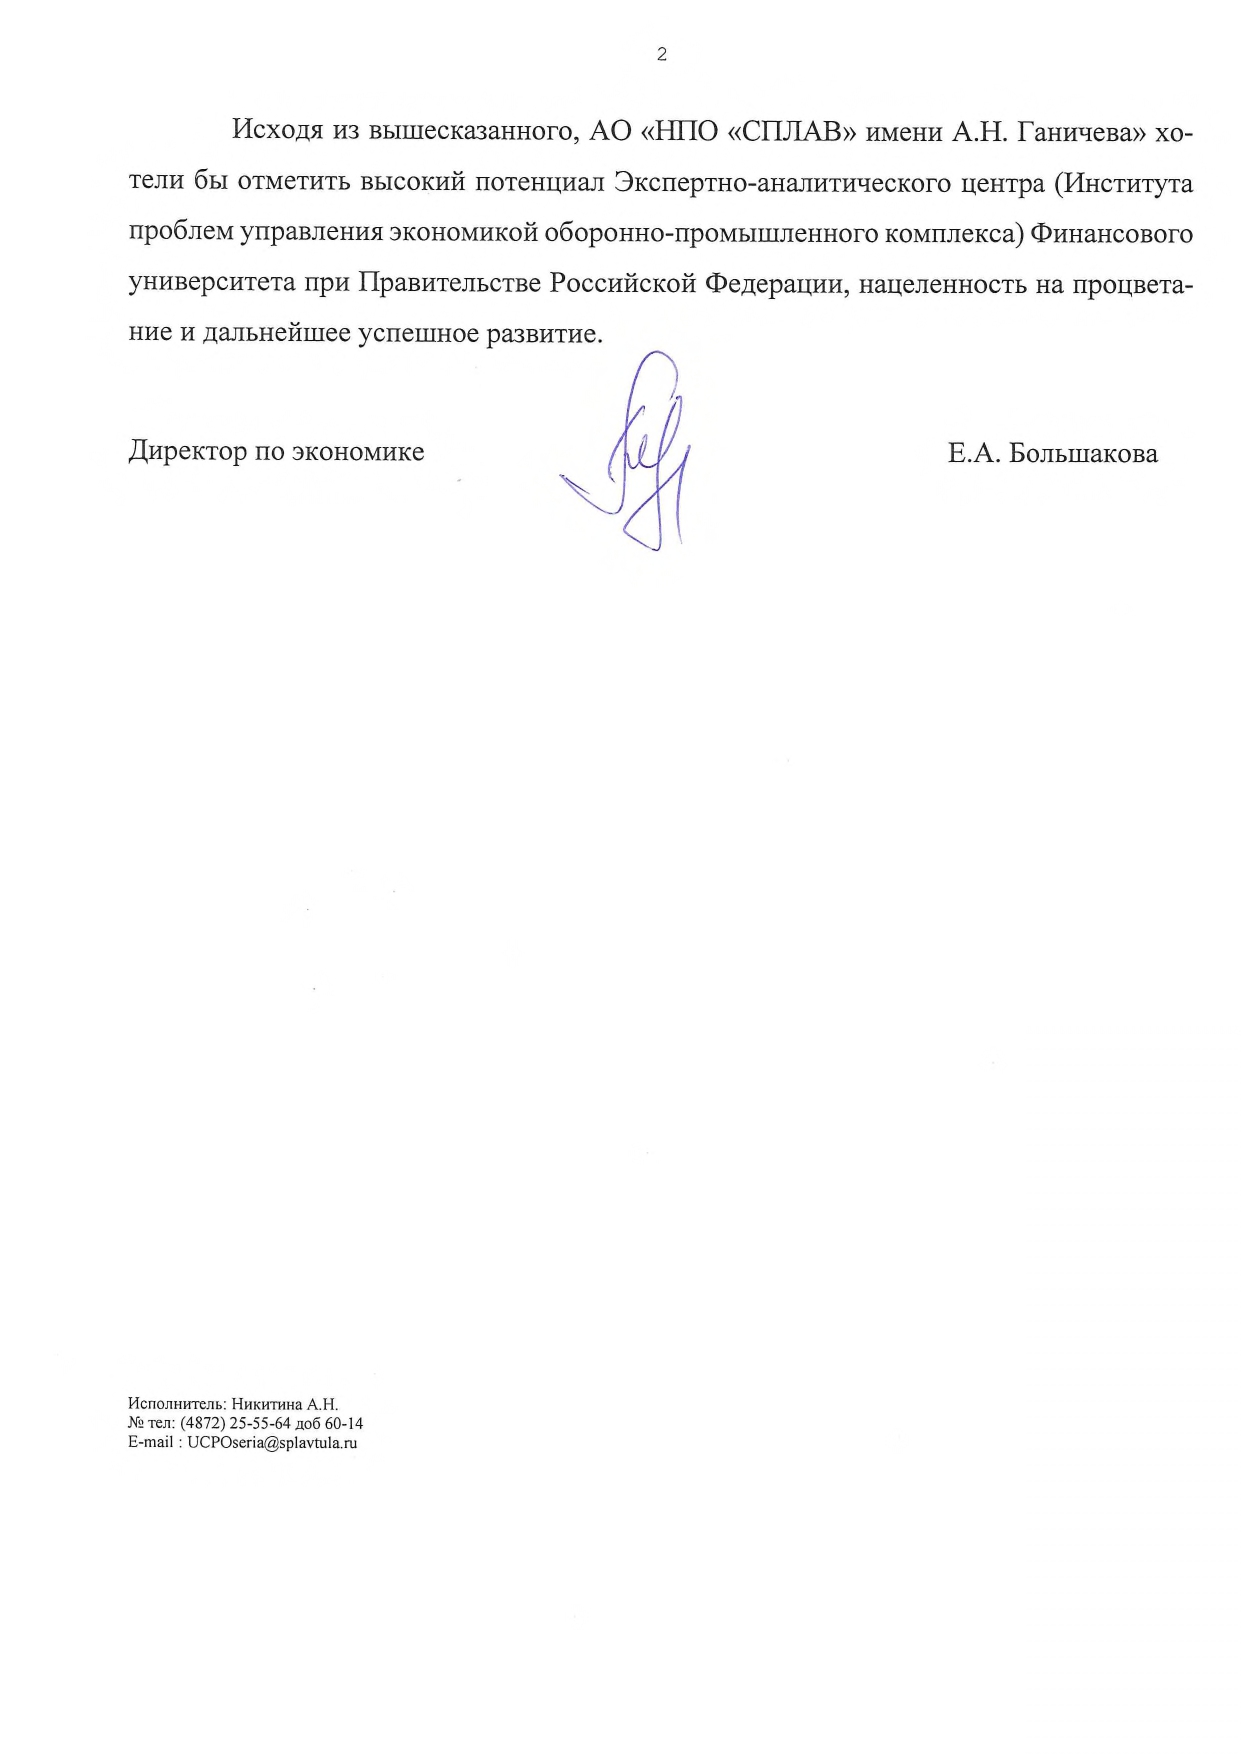 Рекомендательное письмо НПО Сплав_page-0002.jpg